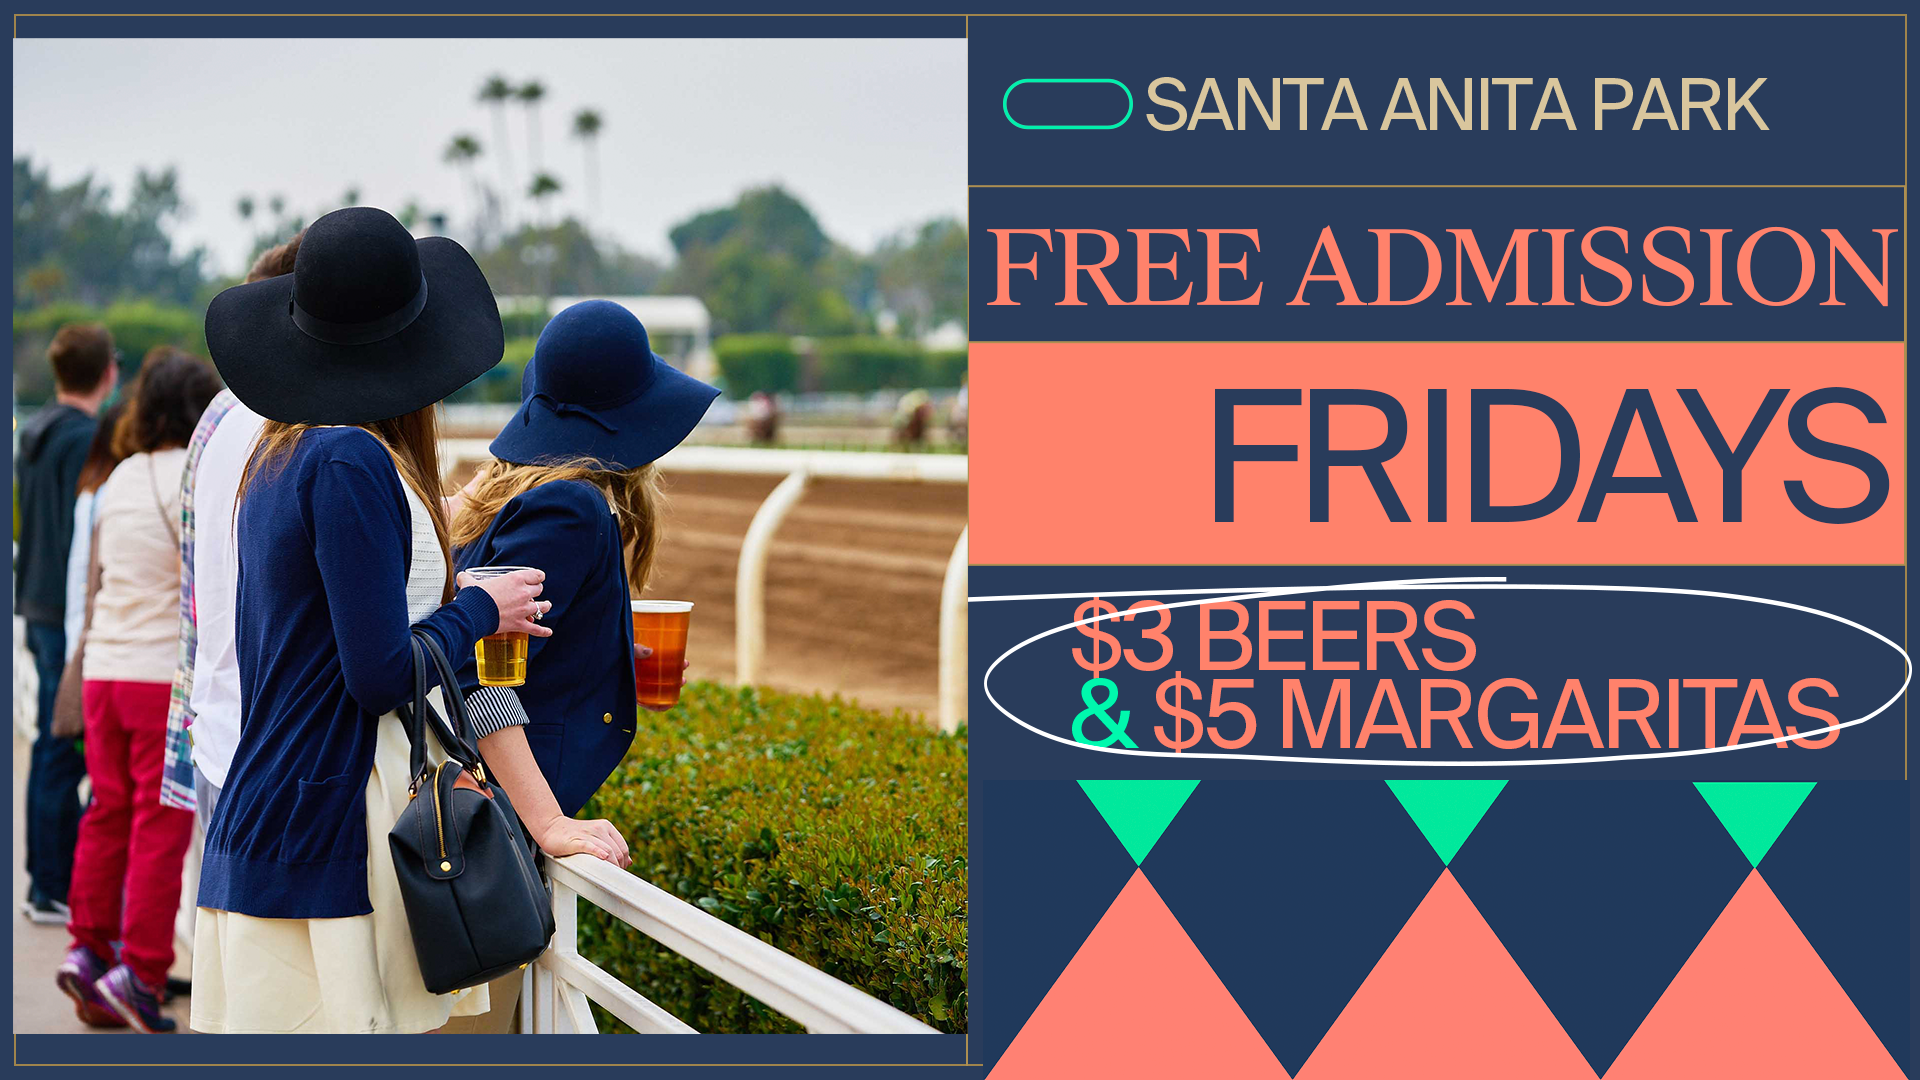 Thoroughbred Horse Racing in Southern California Santa Anita Park